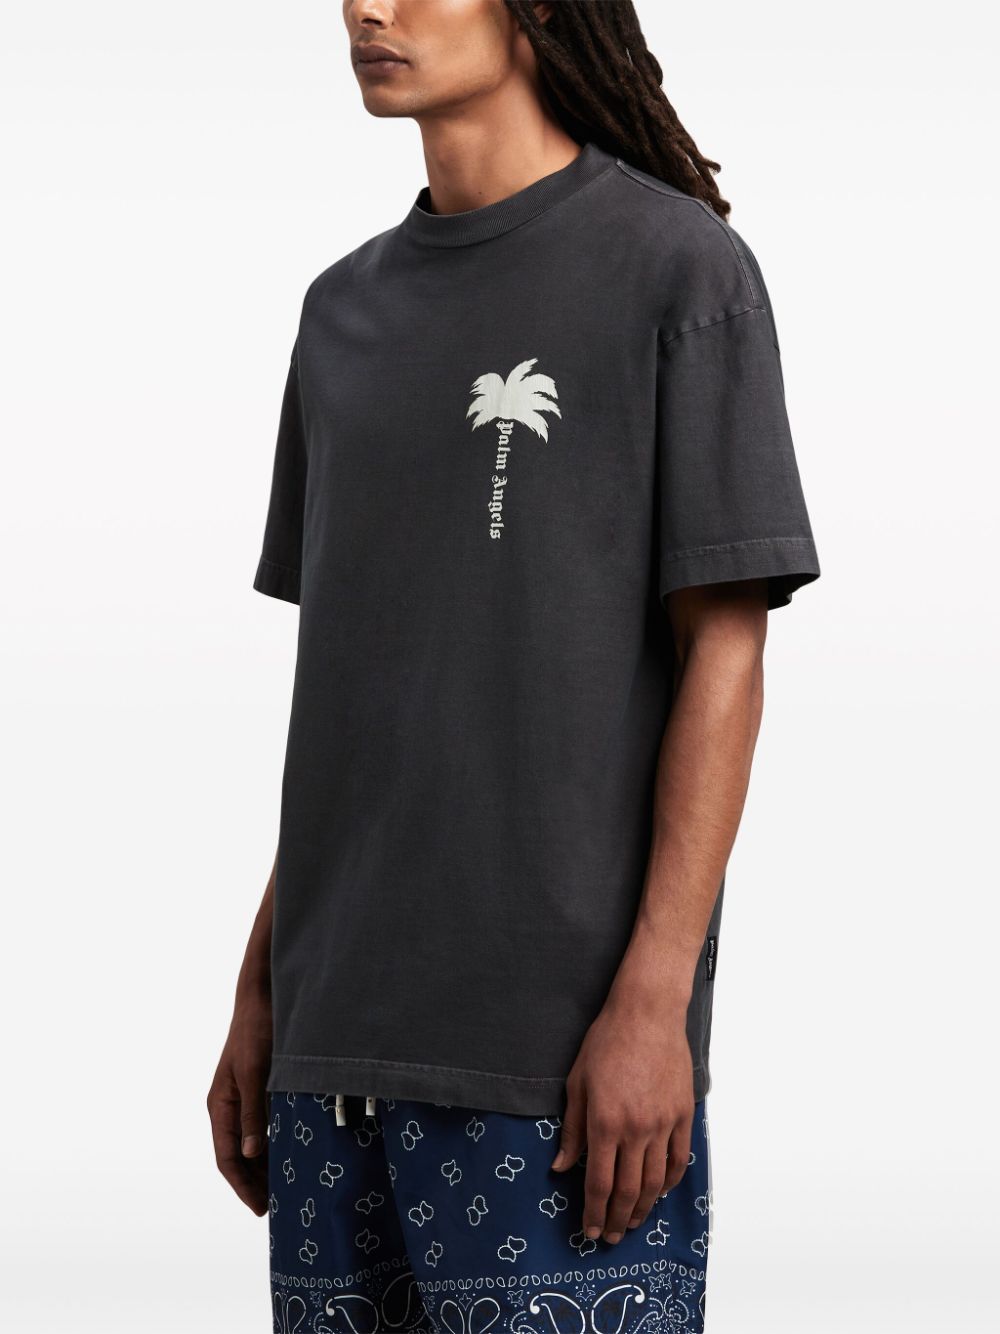 Palm motif T-shirt